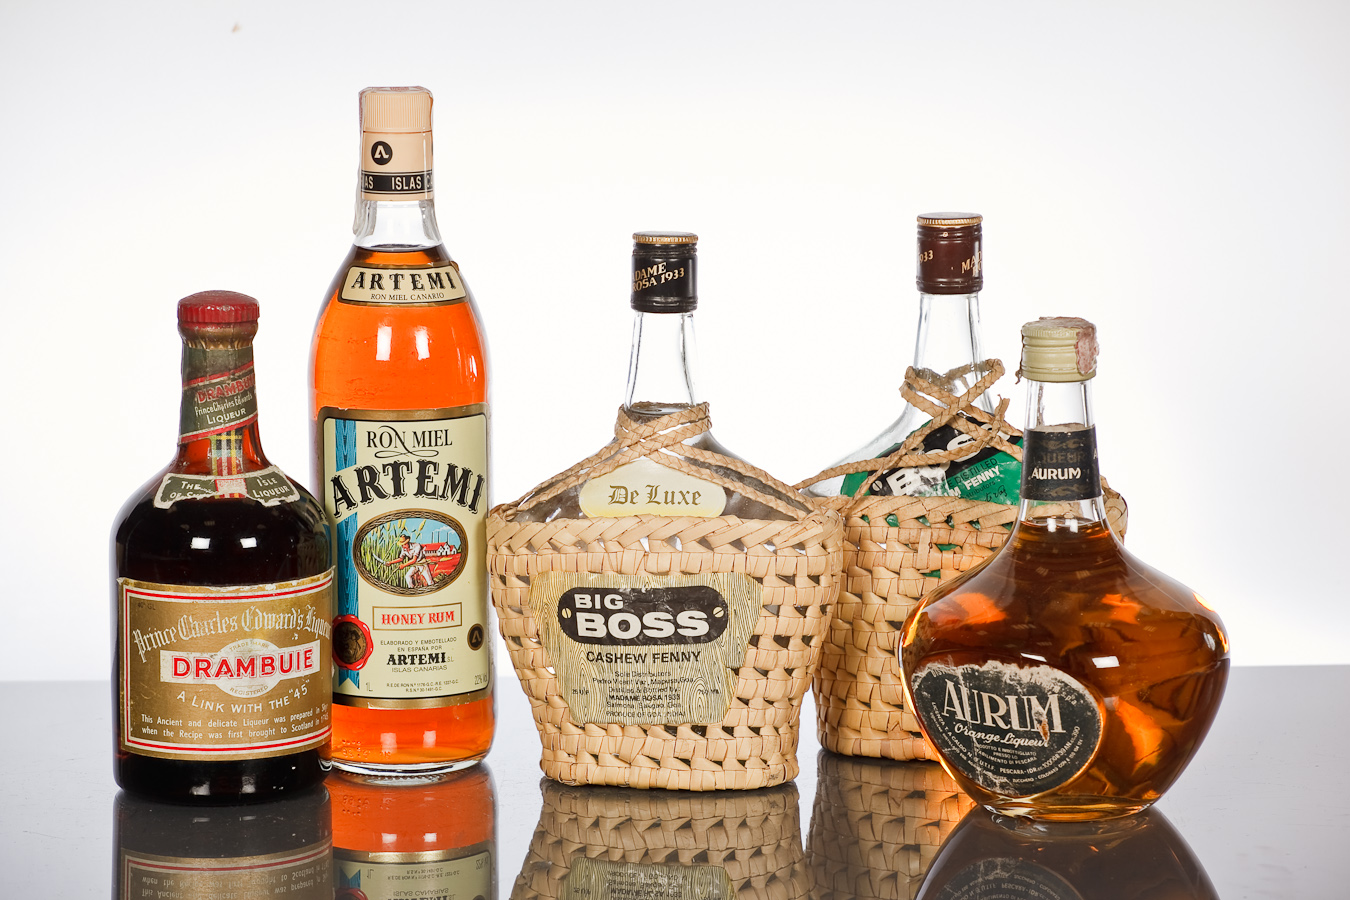 RON MIEL ARTEMI
Canary Island Honey Rum. 1 L, 22% volume.
BIG BOSS CASHEW FENNY
Goan Liqueur. 750ml,